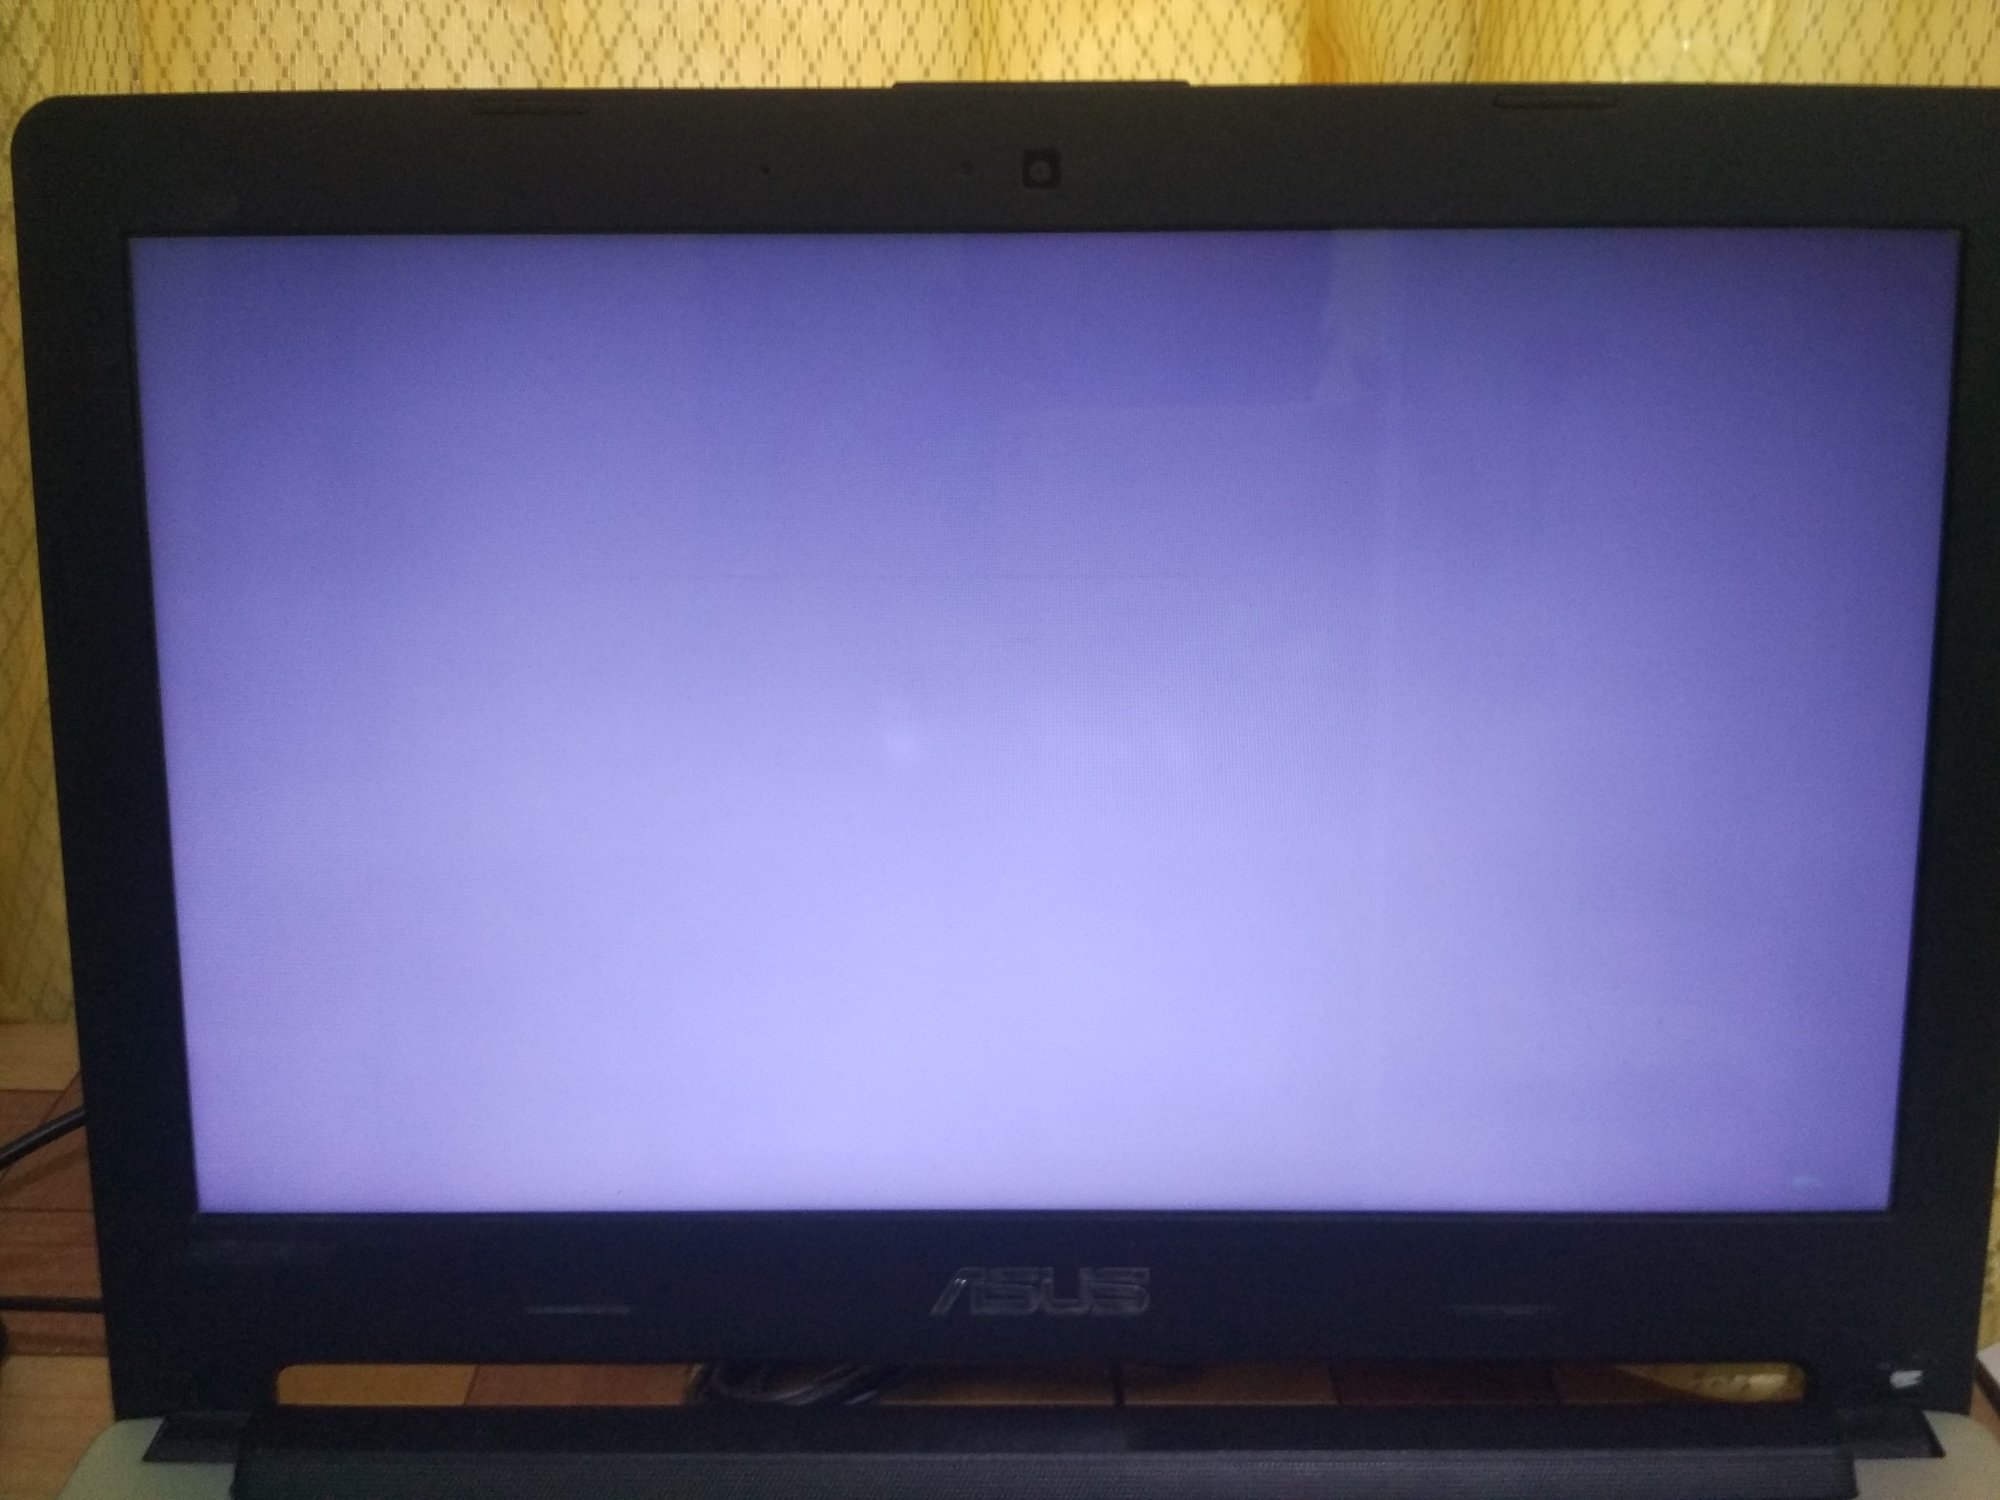 Windows 10 Updater is not working? 3aa4651e-f649-434c-ab9e-1f9504e9e404?upload=true.jpg